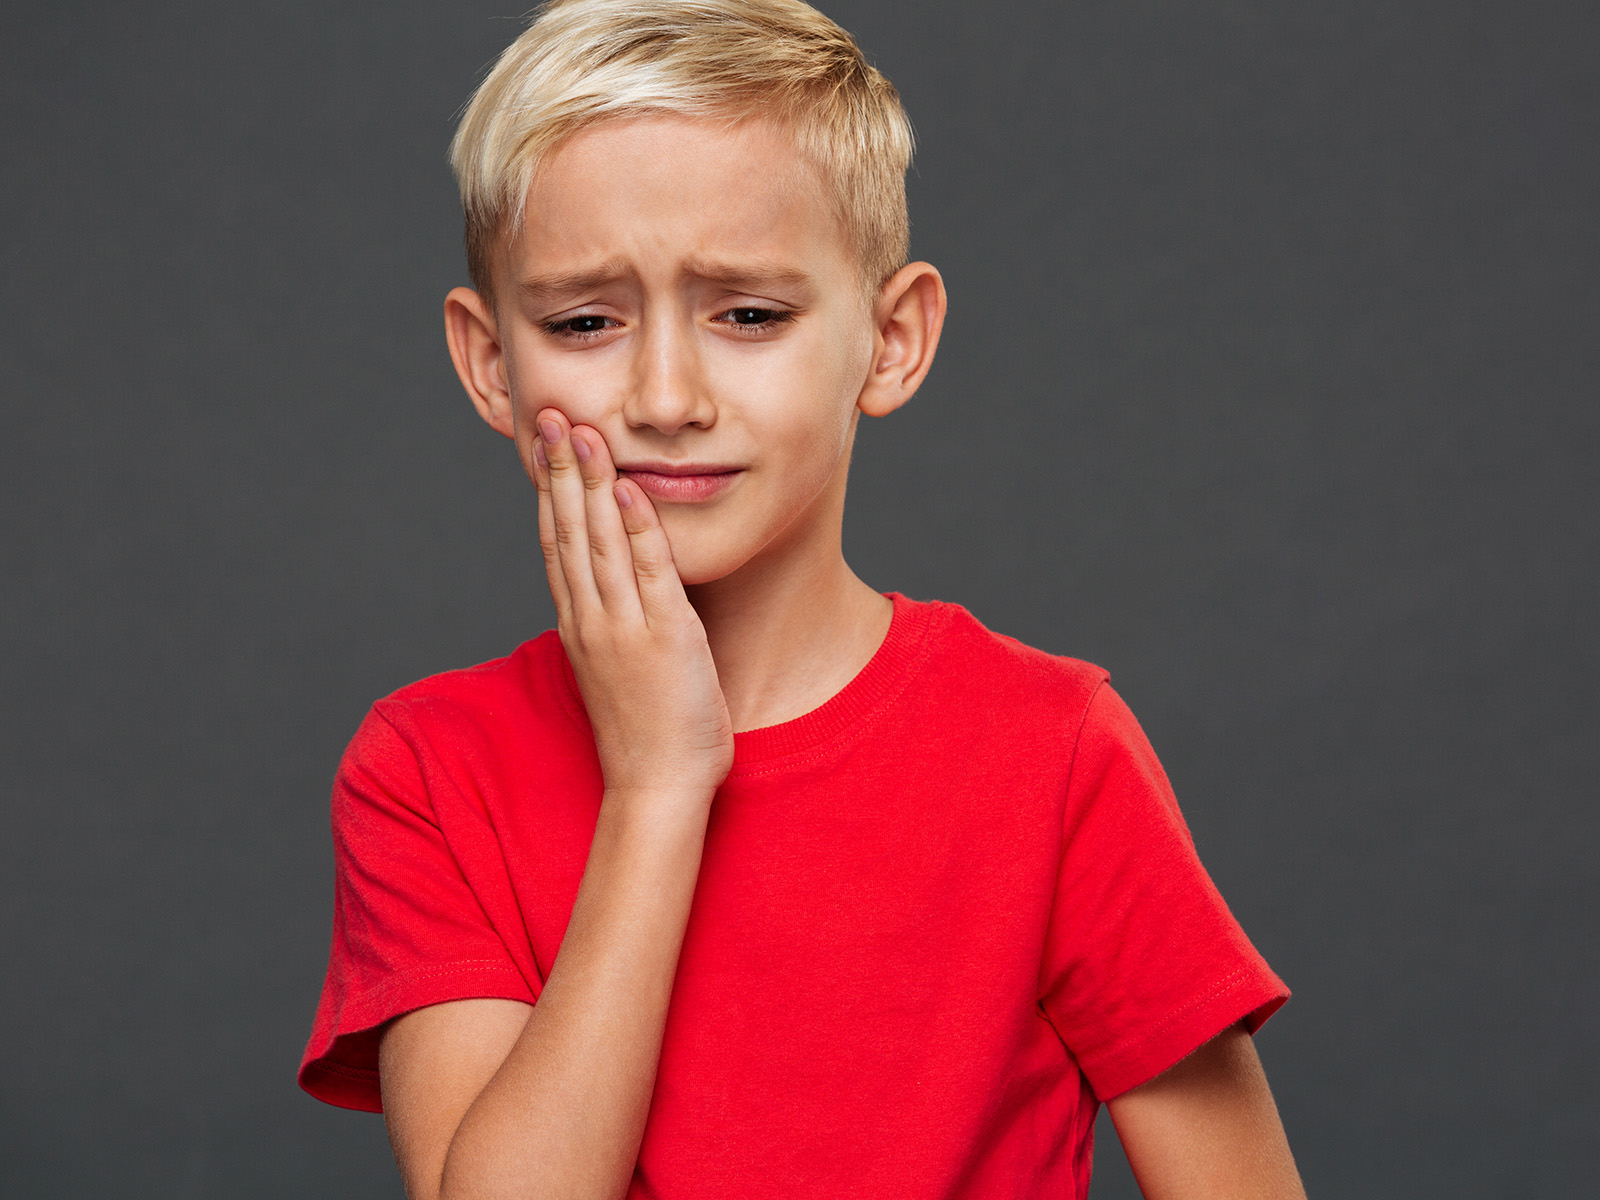 Is Tooth Pain In Kids A Dental Emergency?